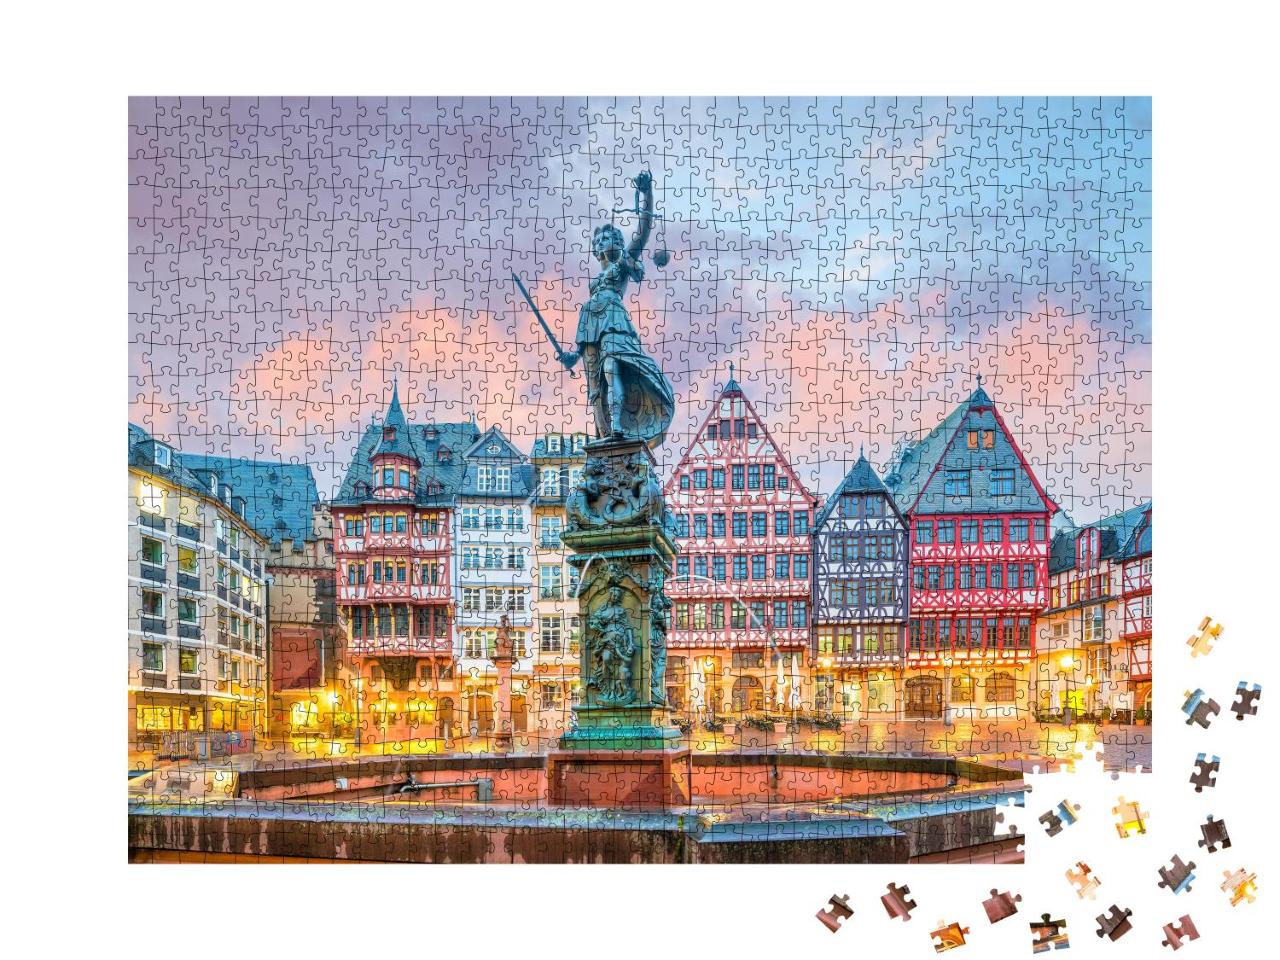 Puzzle 1000 Teile „Dämmerung am Altstadtplatz Römerberg in Frankfurt, Deutschland“